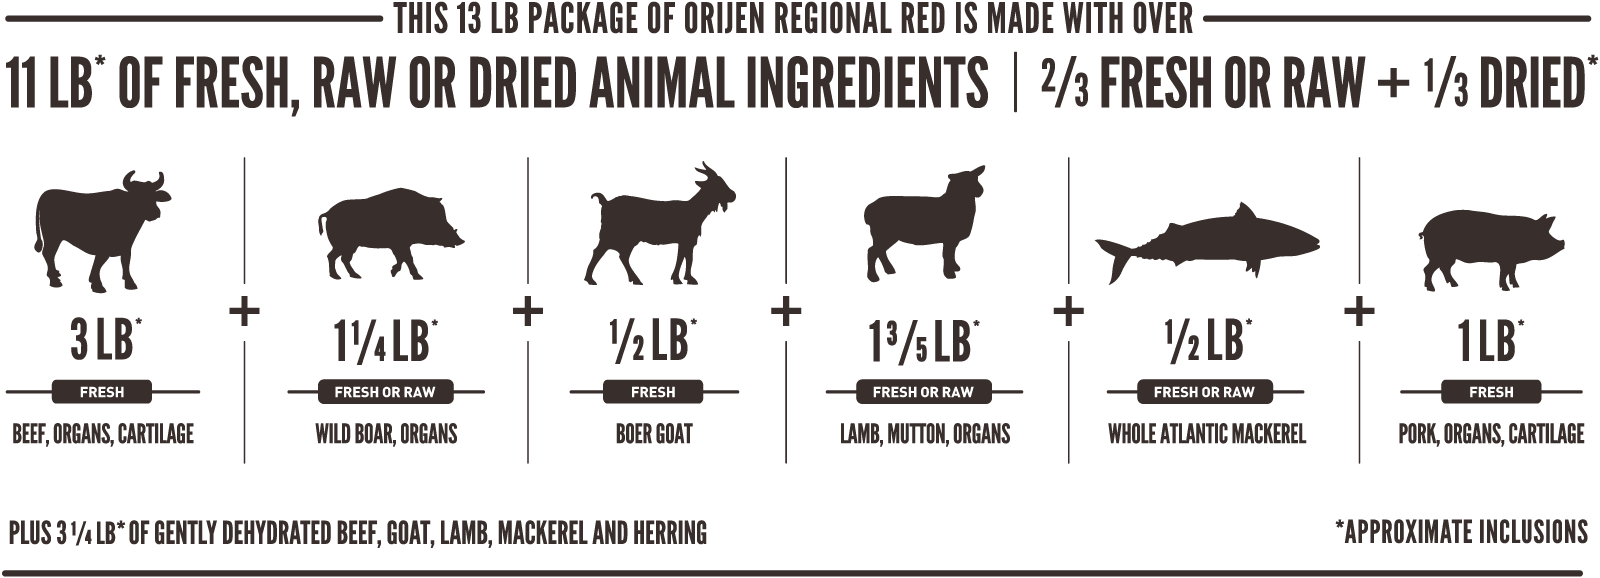 ORIJEN Regional Red Meatmath Formula and Dog Food Ingredients